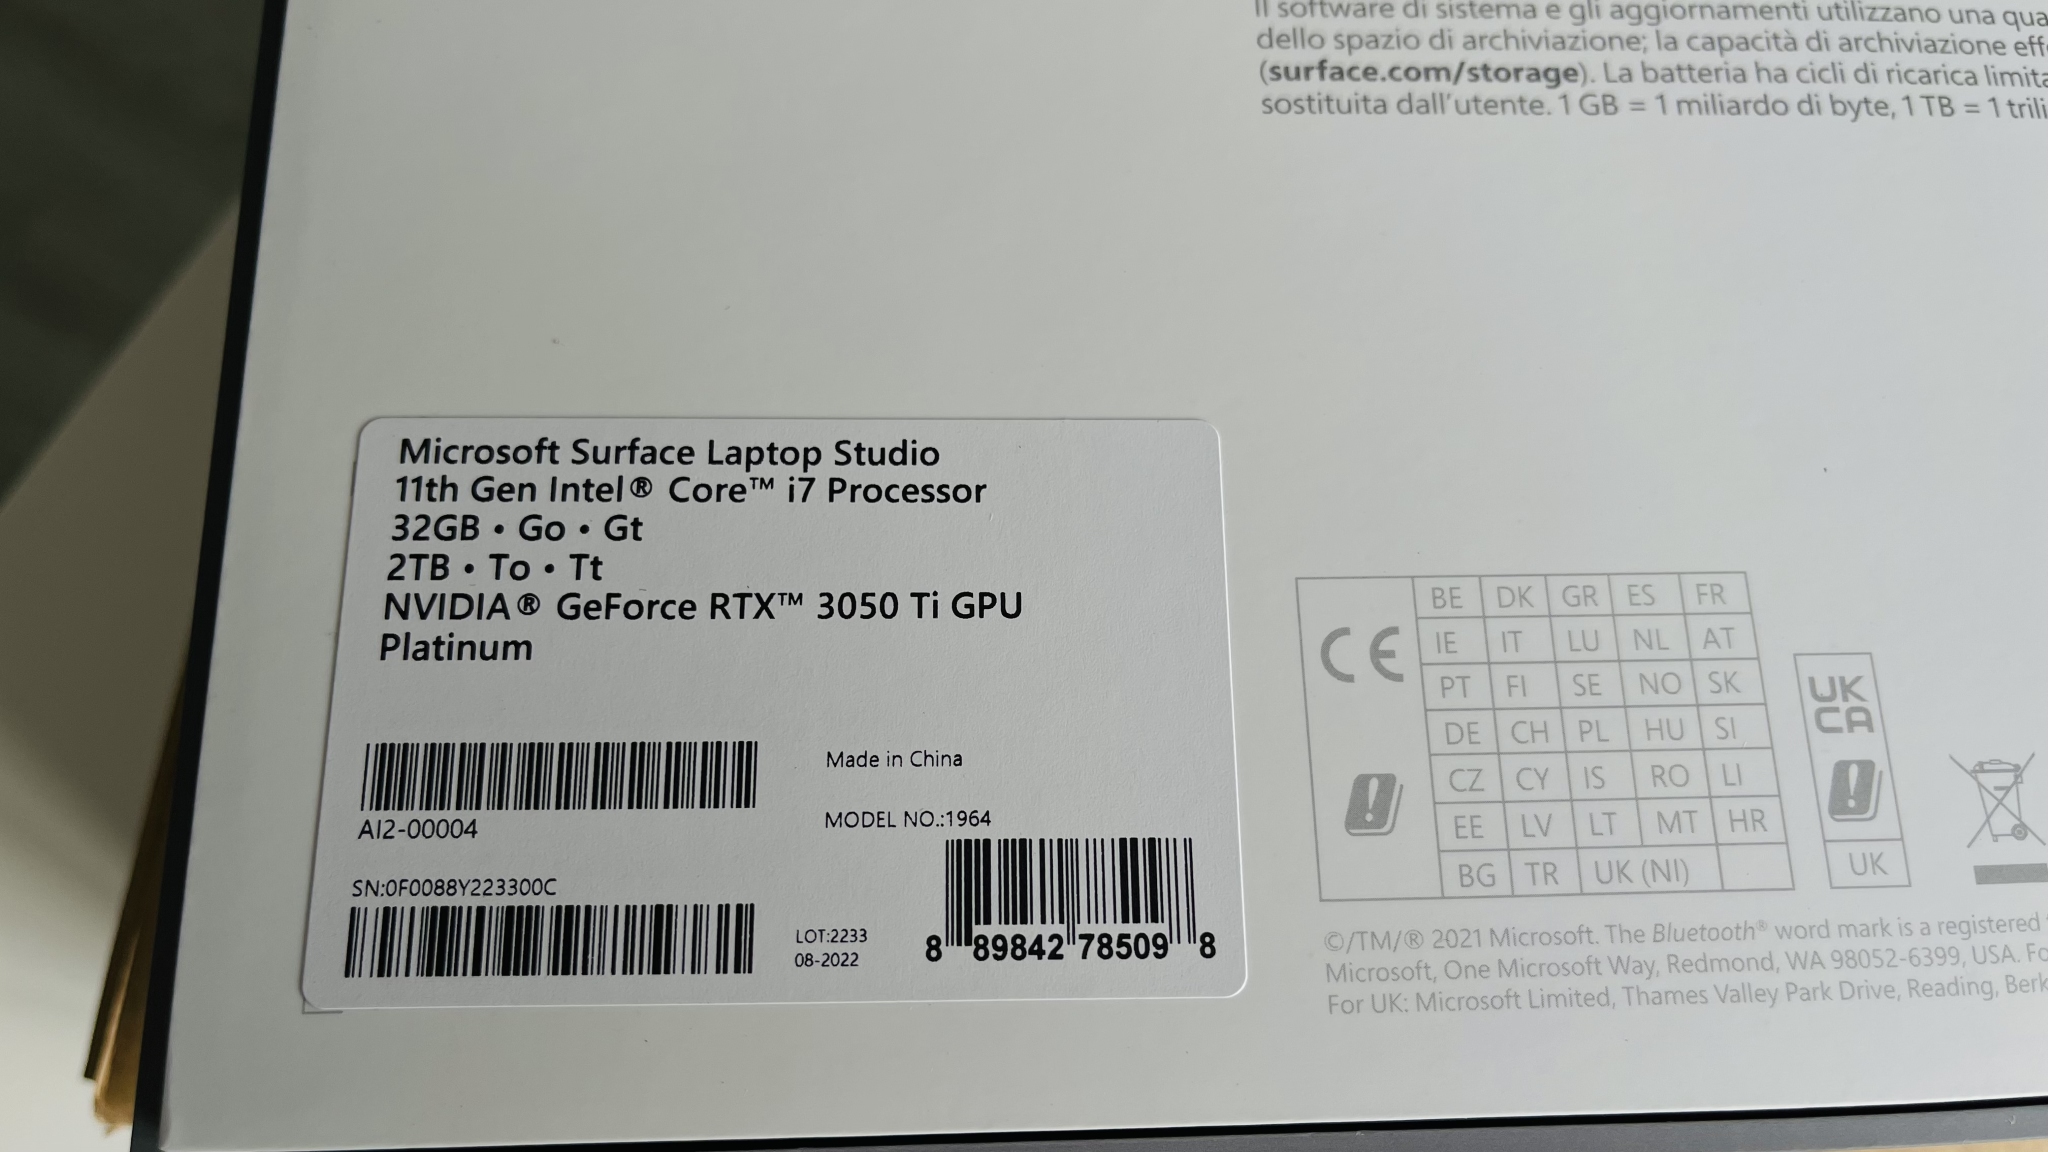 microsoft-surface-studio-laptop-2022-08-31-14.42.00 微软顶配 Surface Studio Laptop 开箱和测评 微软 测评 硬件